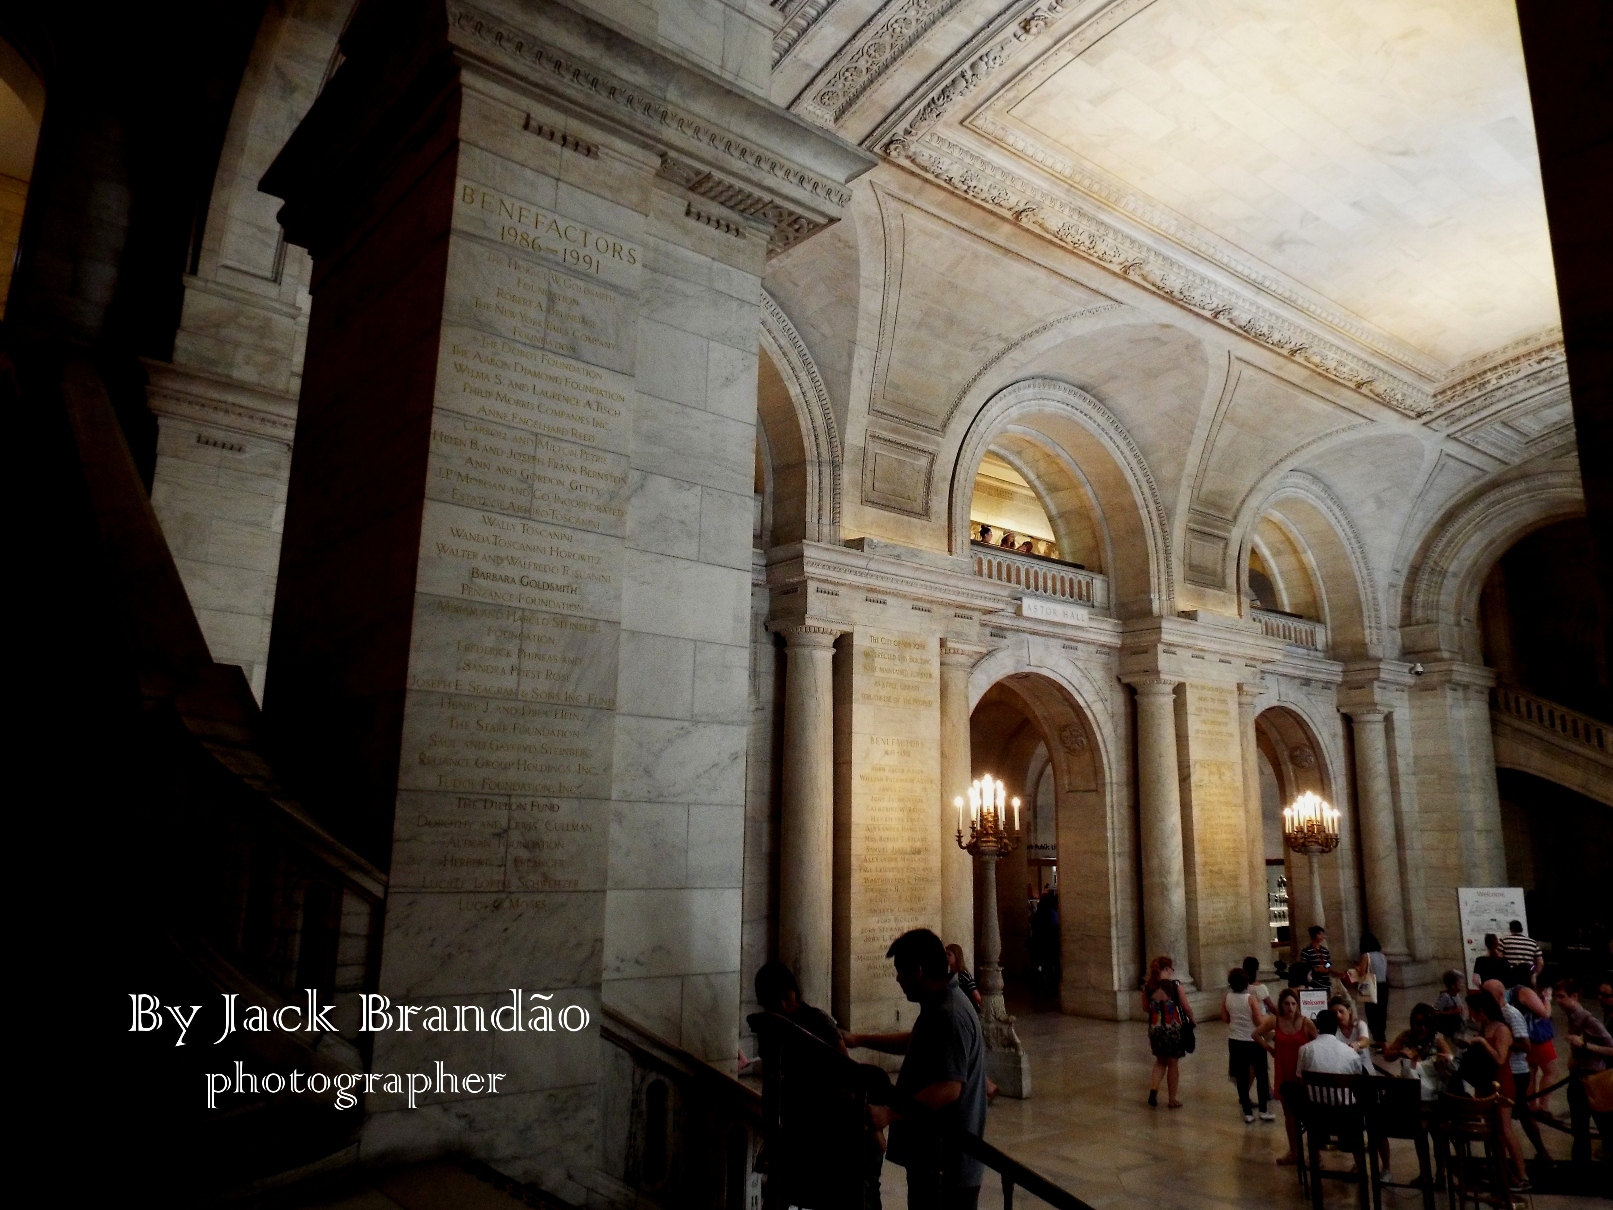  People; The New York Public Library; Building; USA; New York; Prof. Dr. Jack Brandão; photographer, writer, photos for sale, jackbran